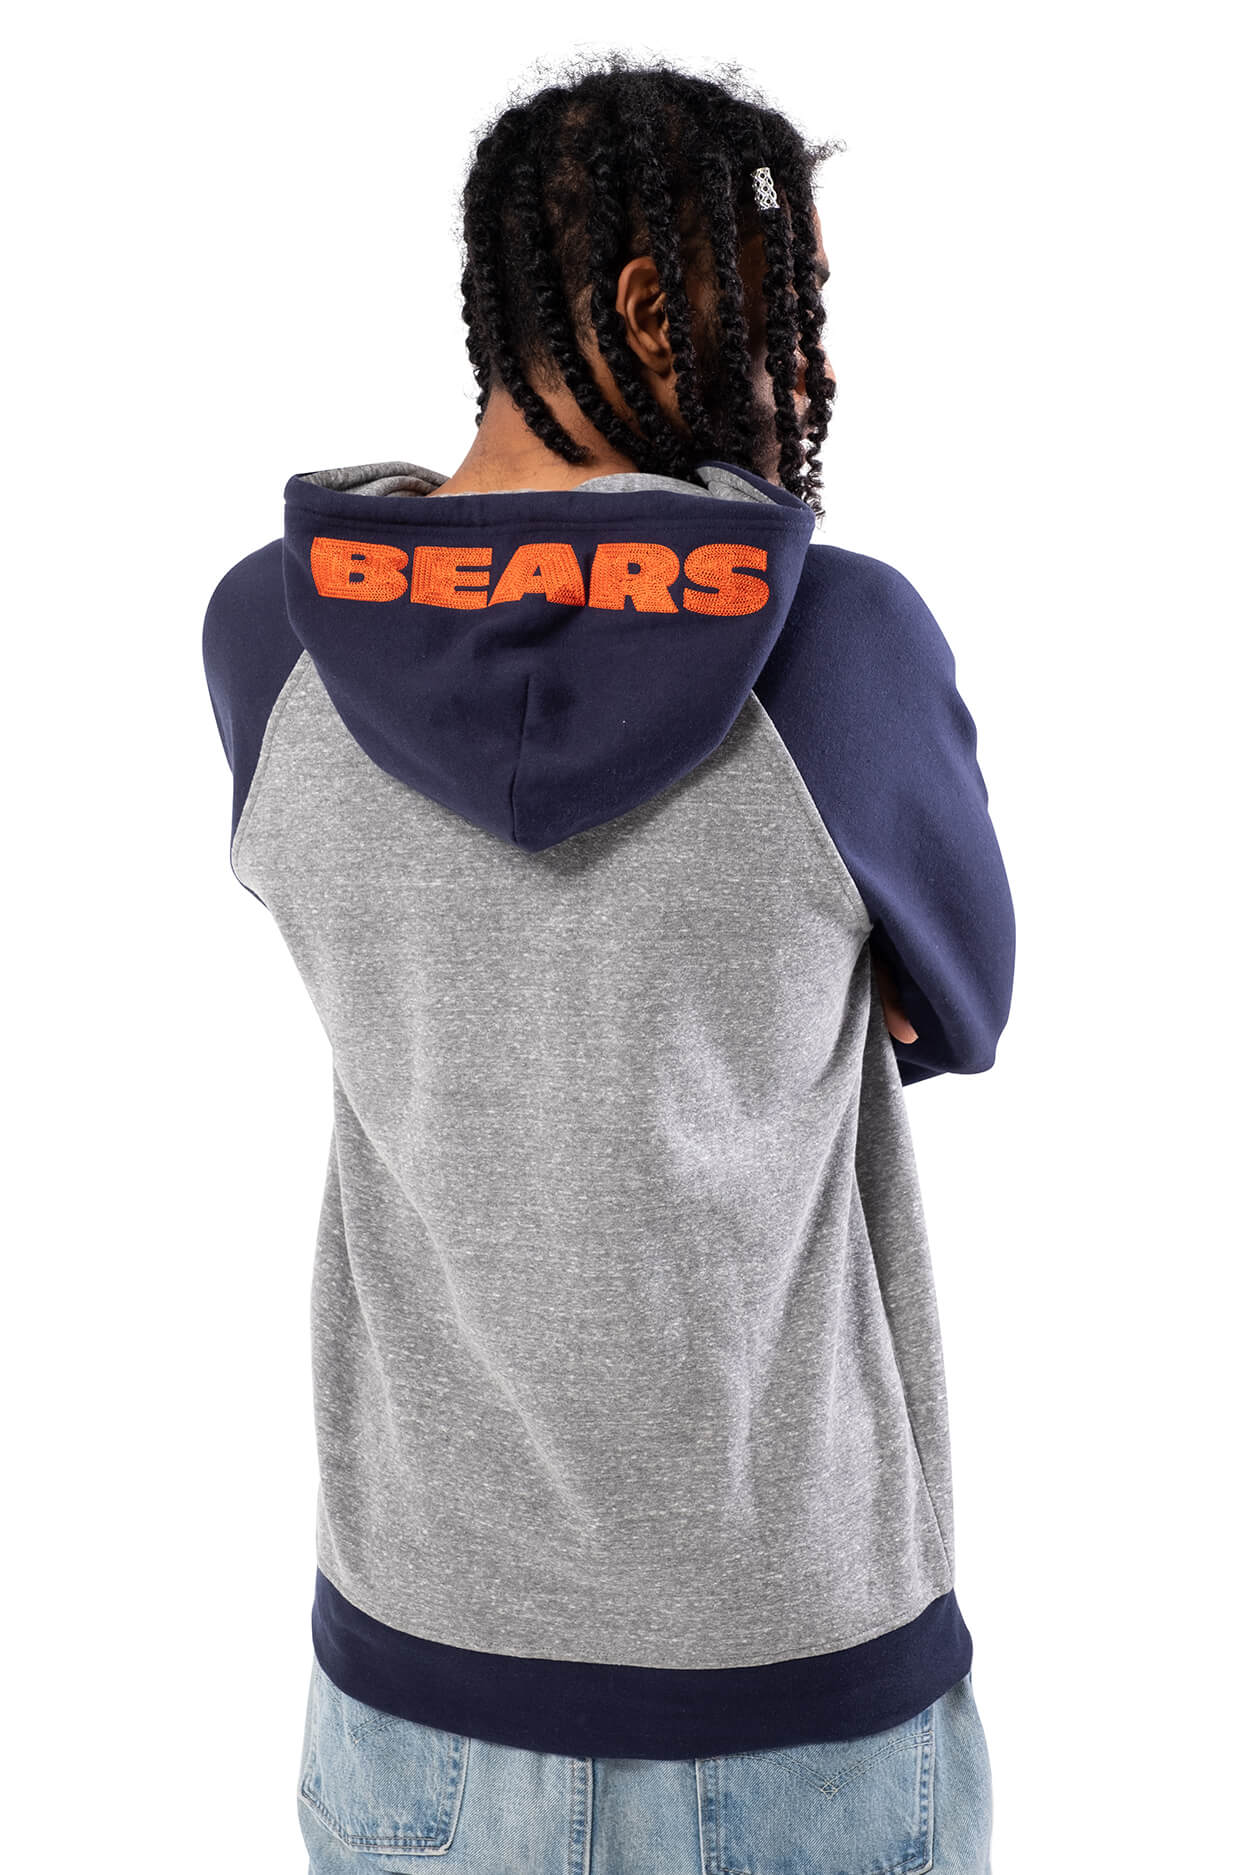 NFL Chicago Bears Men's Full Zip Hoodie|Chicago Bears